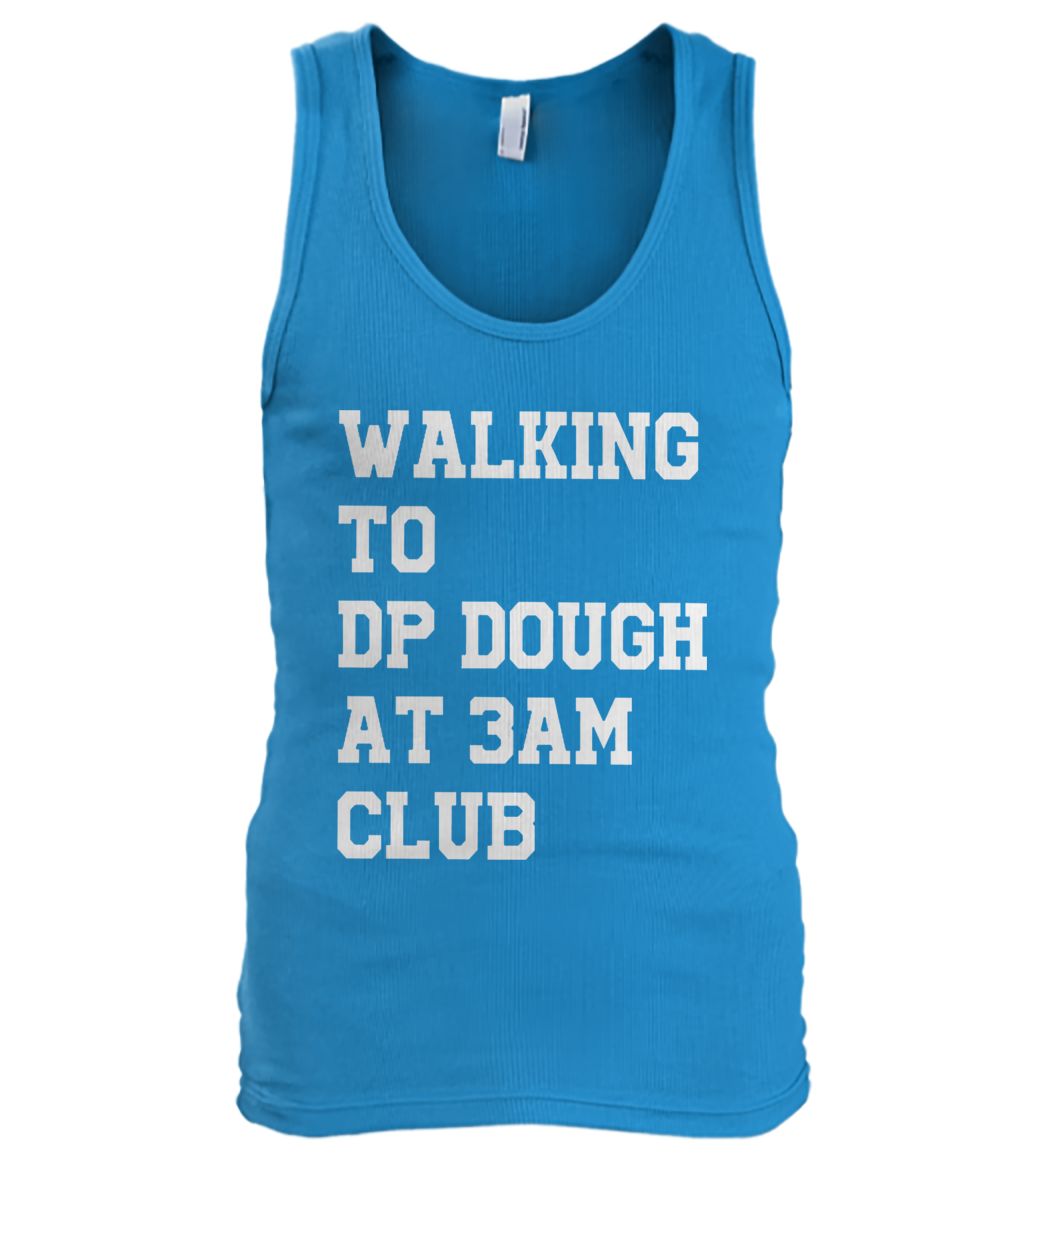 Walking to DP dough at 3am club men's tank top